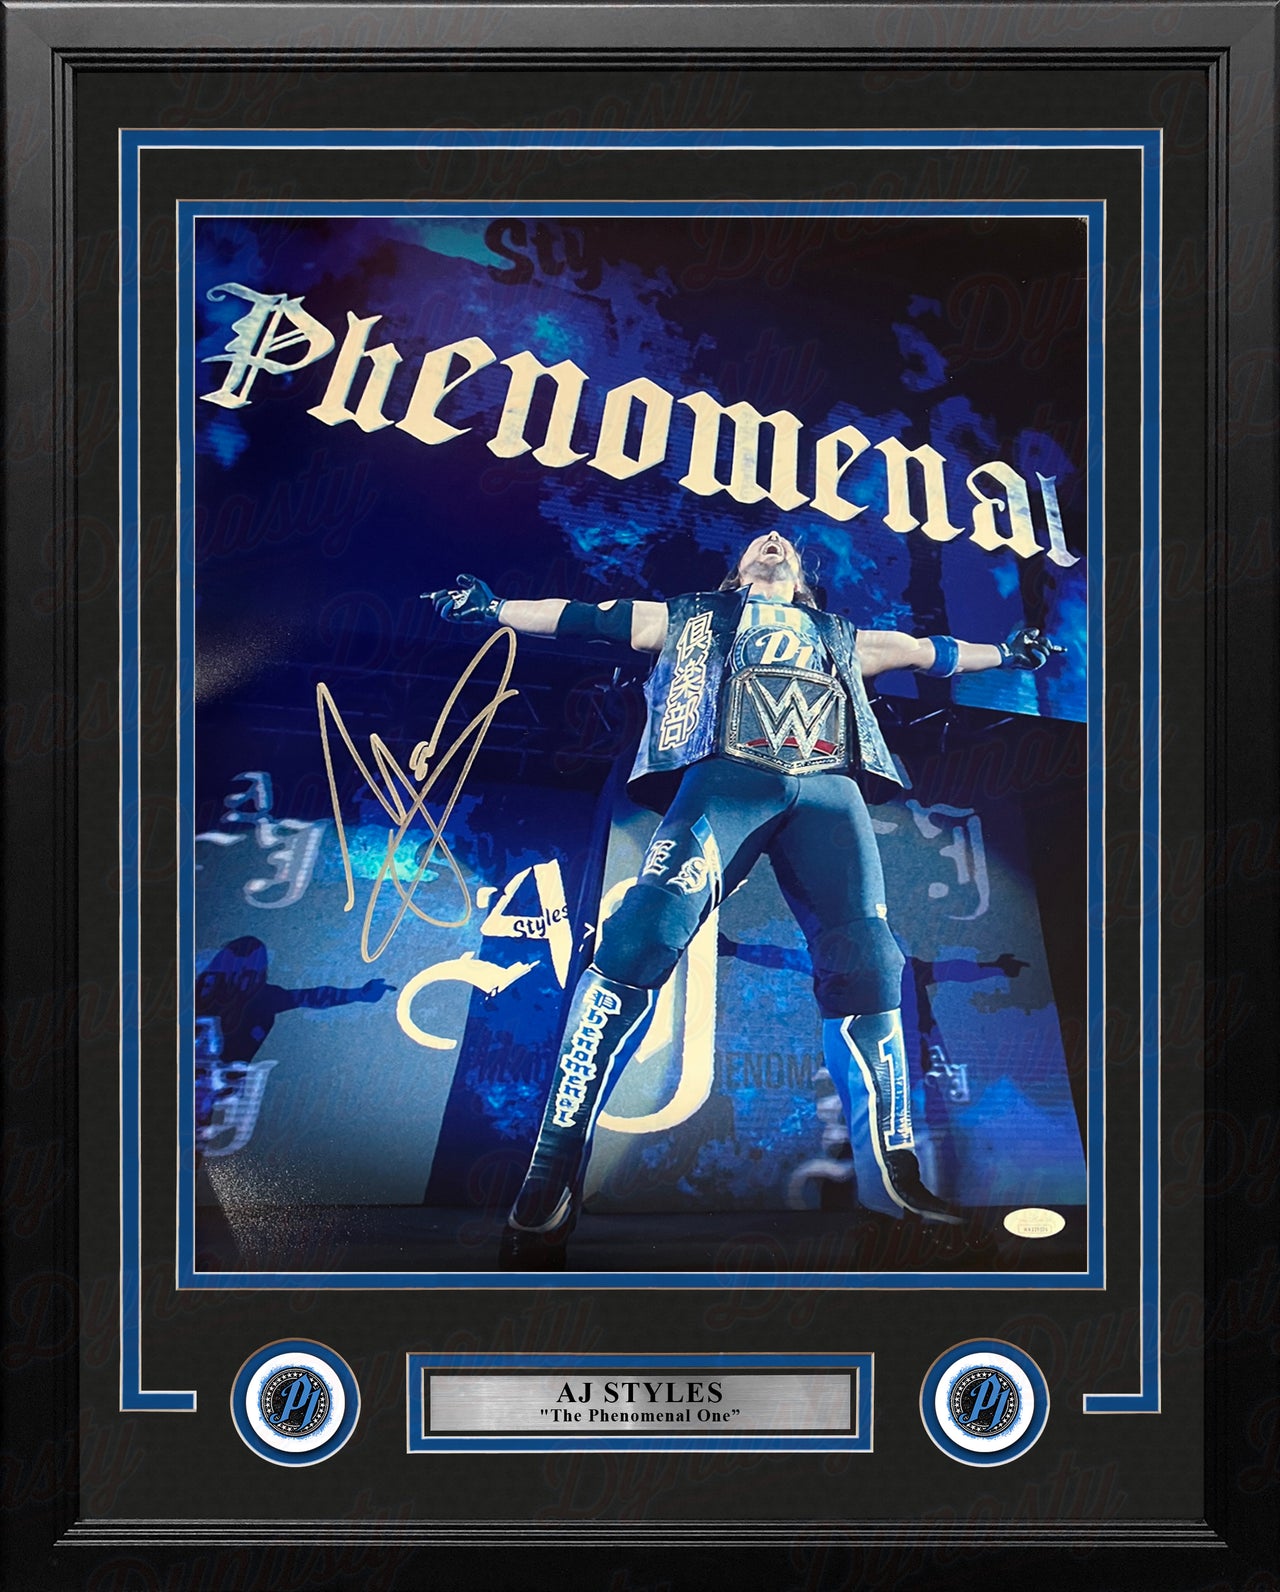 AJ Styles Phenomenal Championship Entrance Autographed Framed WWE Wrestling Photo - Dynasty Sports & Framing 